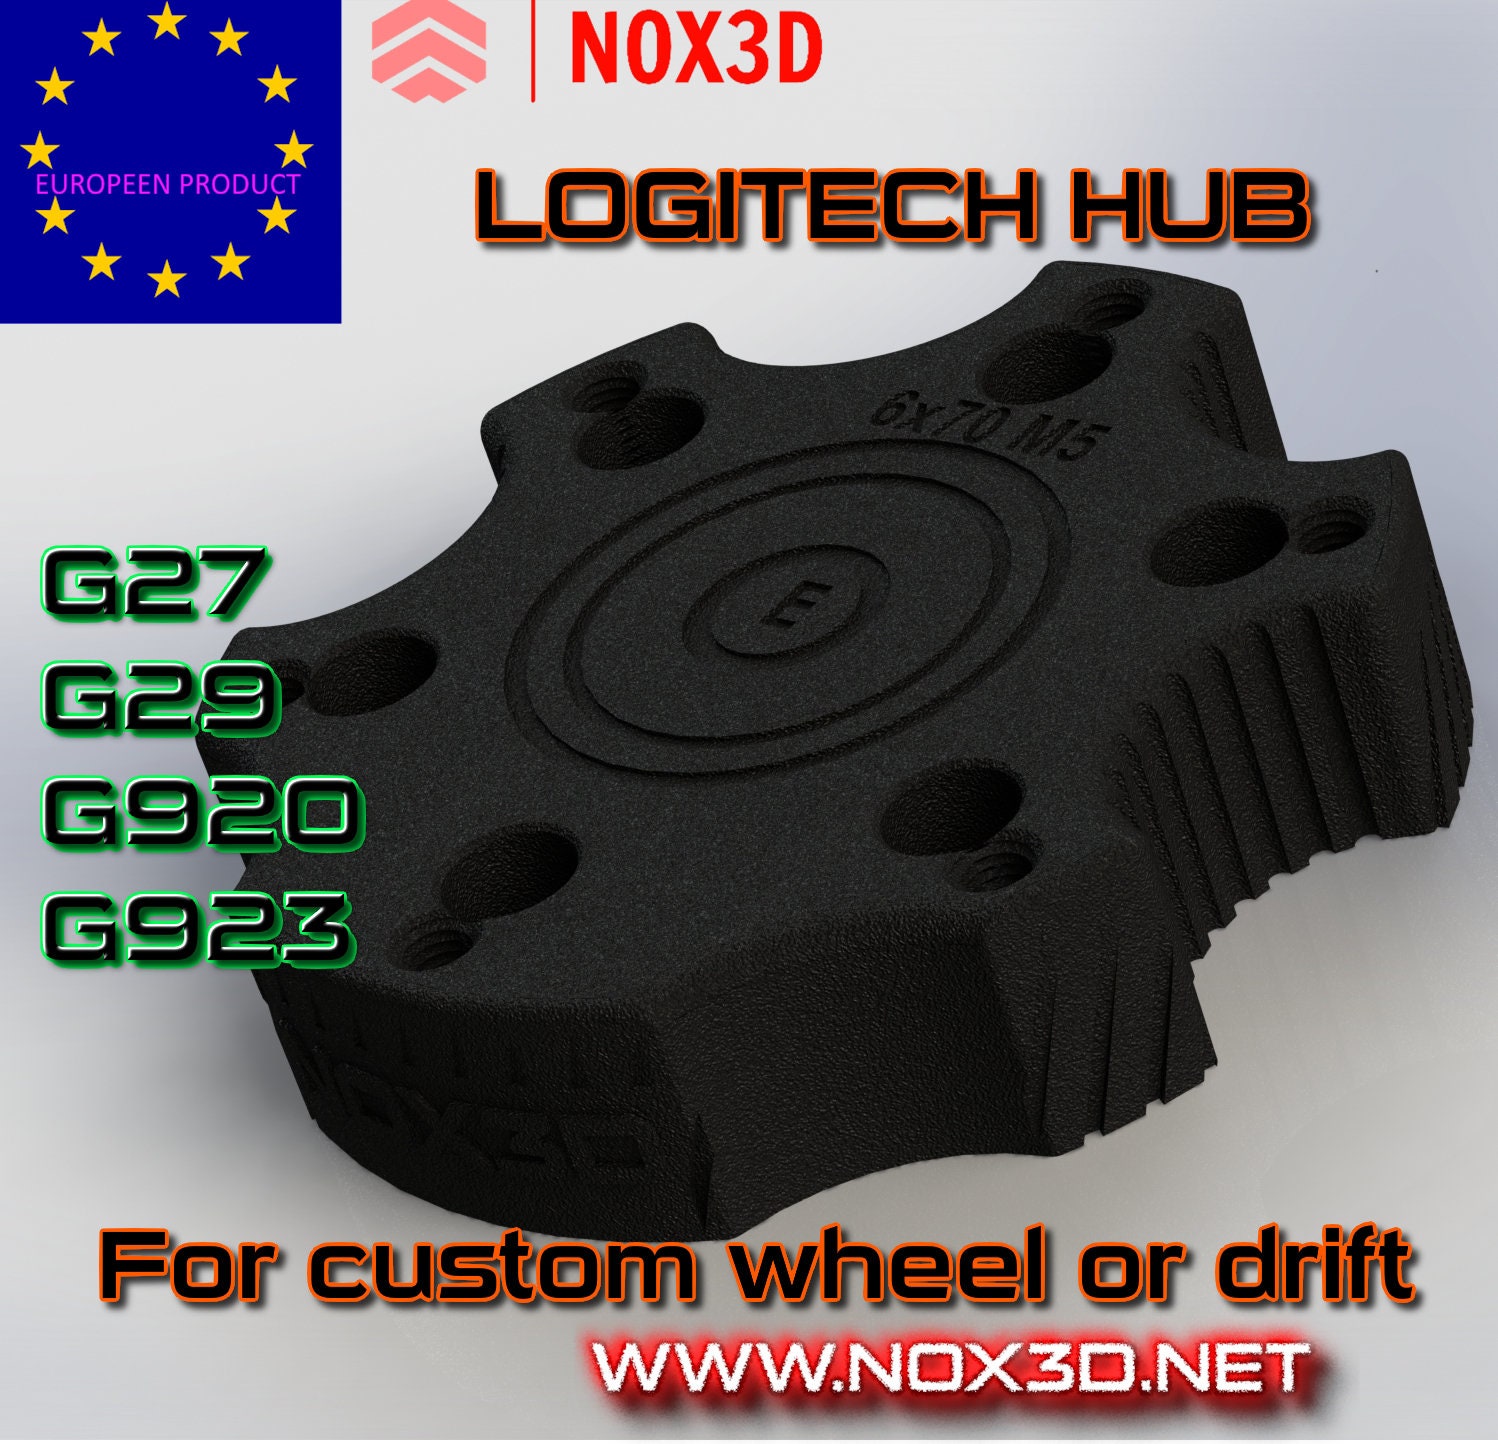 GIMX USB WHEEL ADAPTER- USE YOUR LOGITECH G27, G25 Bahrain